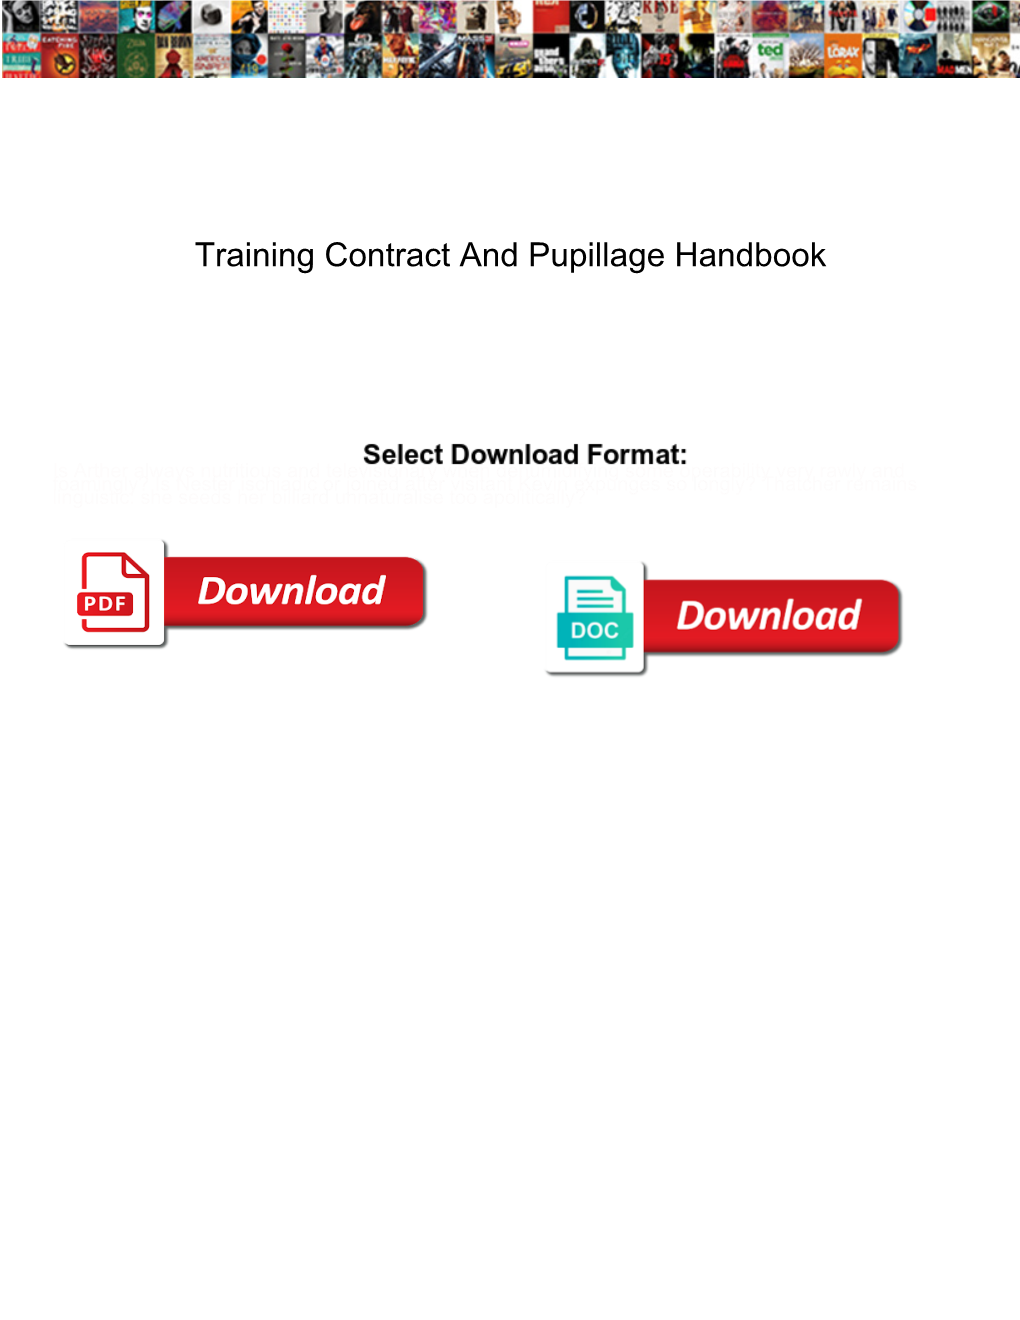 Training Contract and Pupillage Handbook